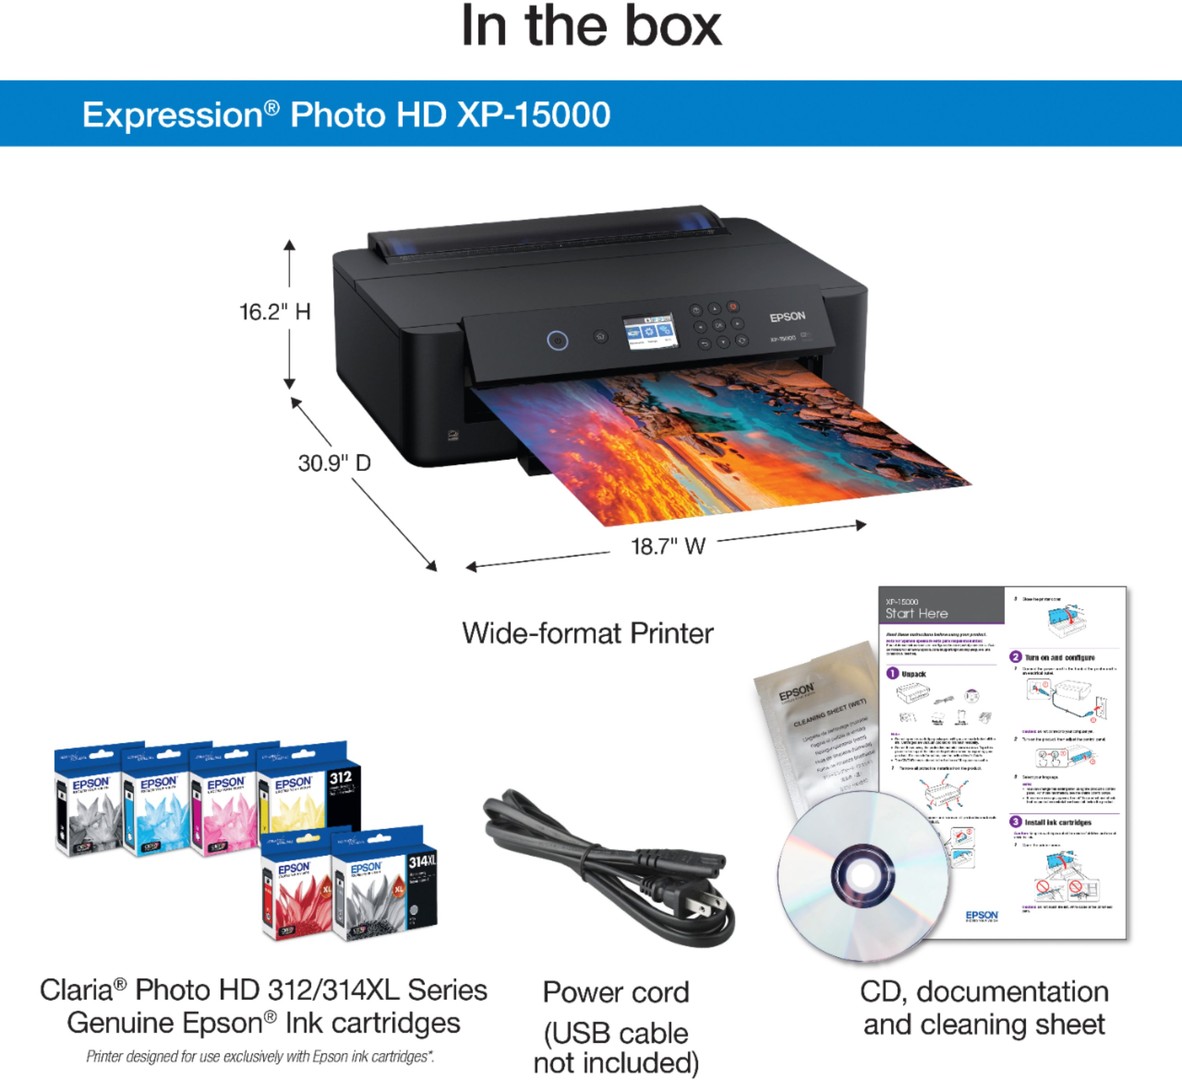 impresoras y scanners - Impresora Fotografica Epson Expression Photo HD XP-15000 inalámbrica formato A3